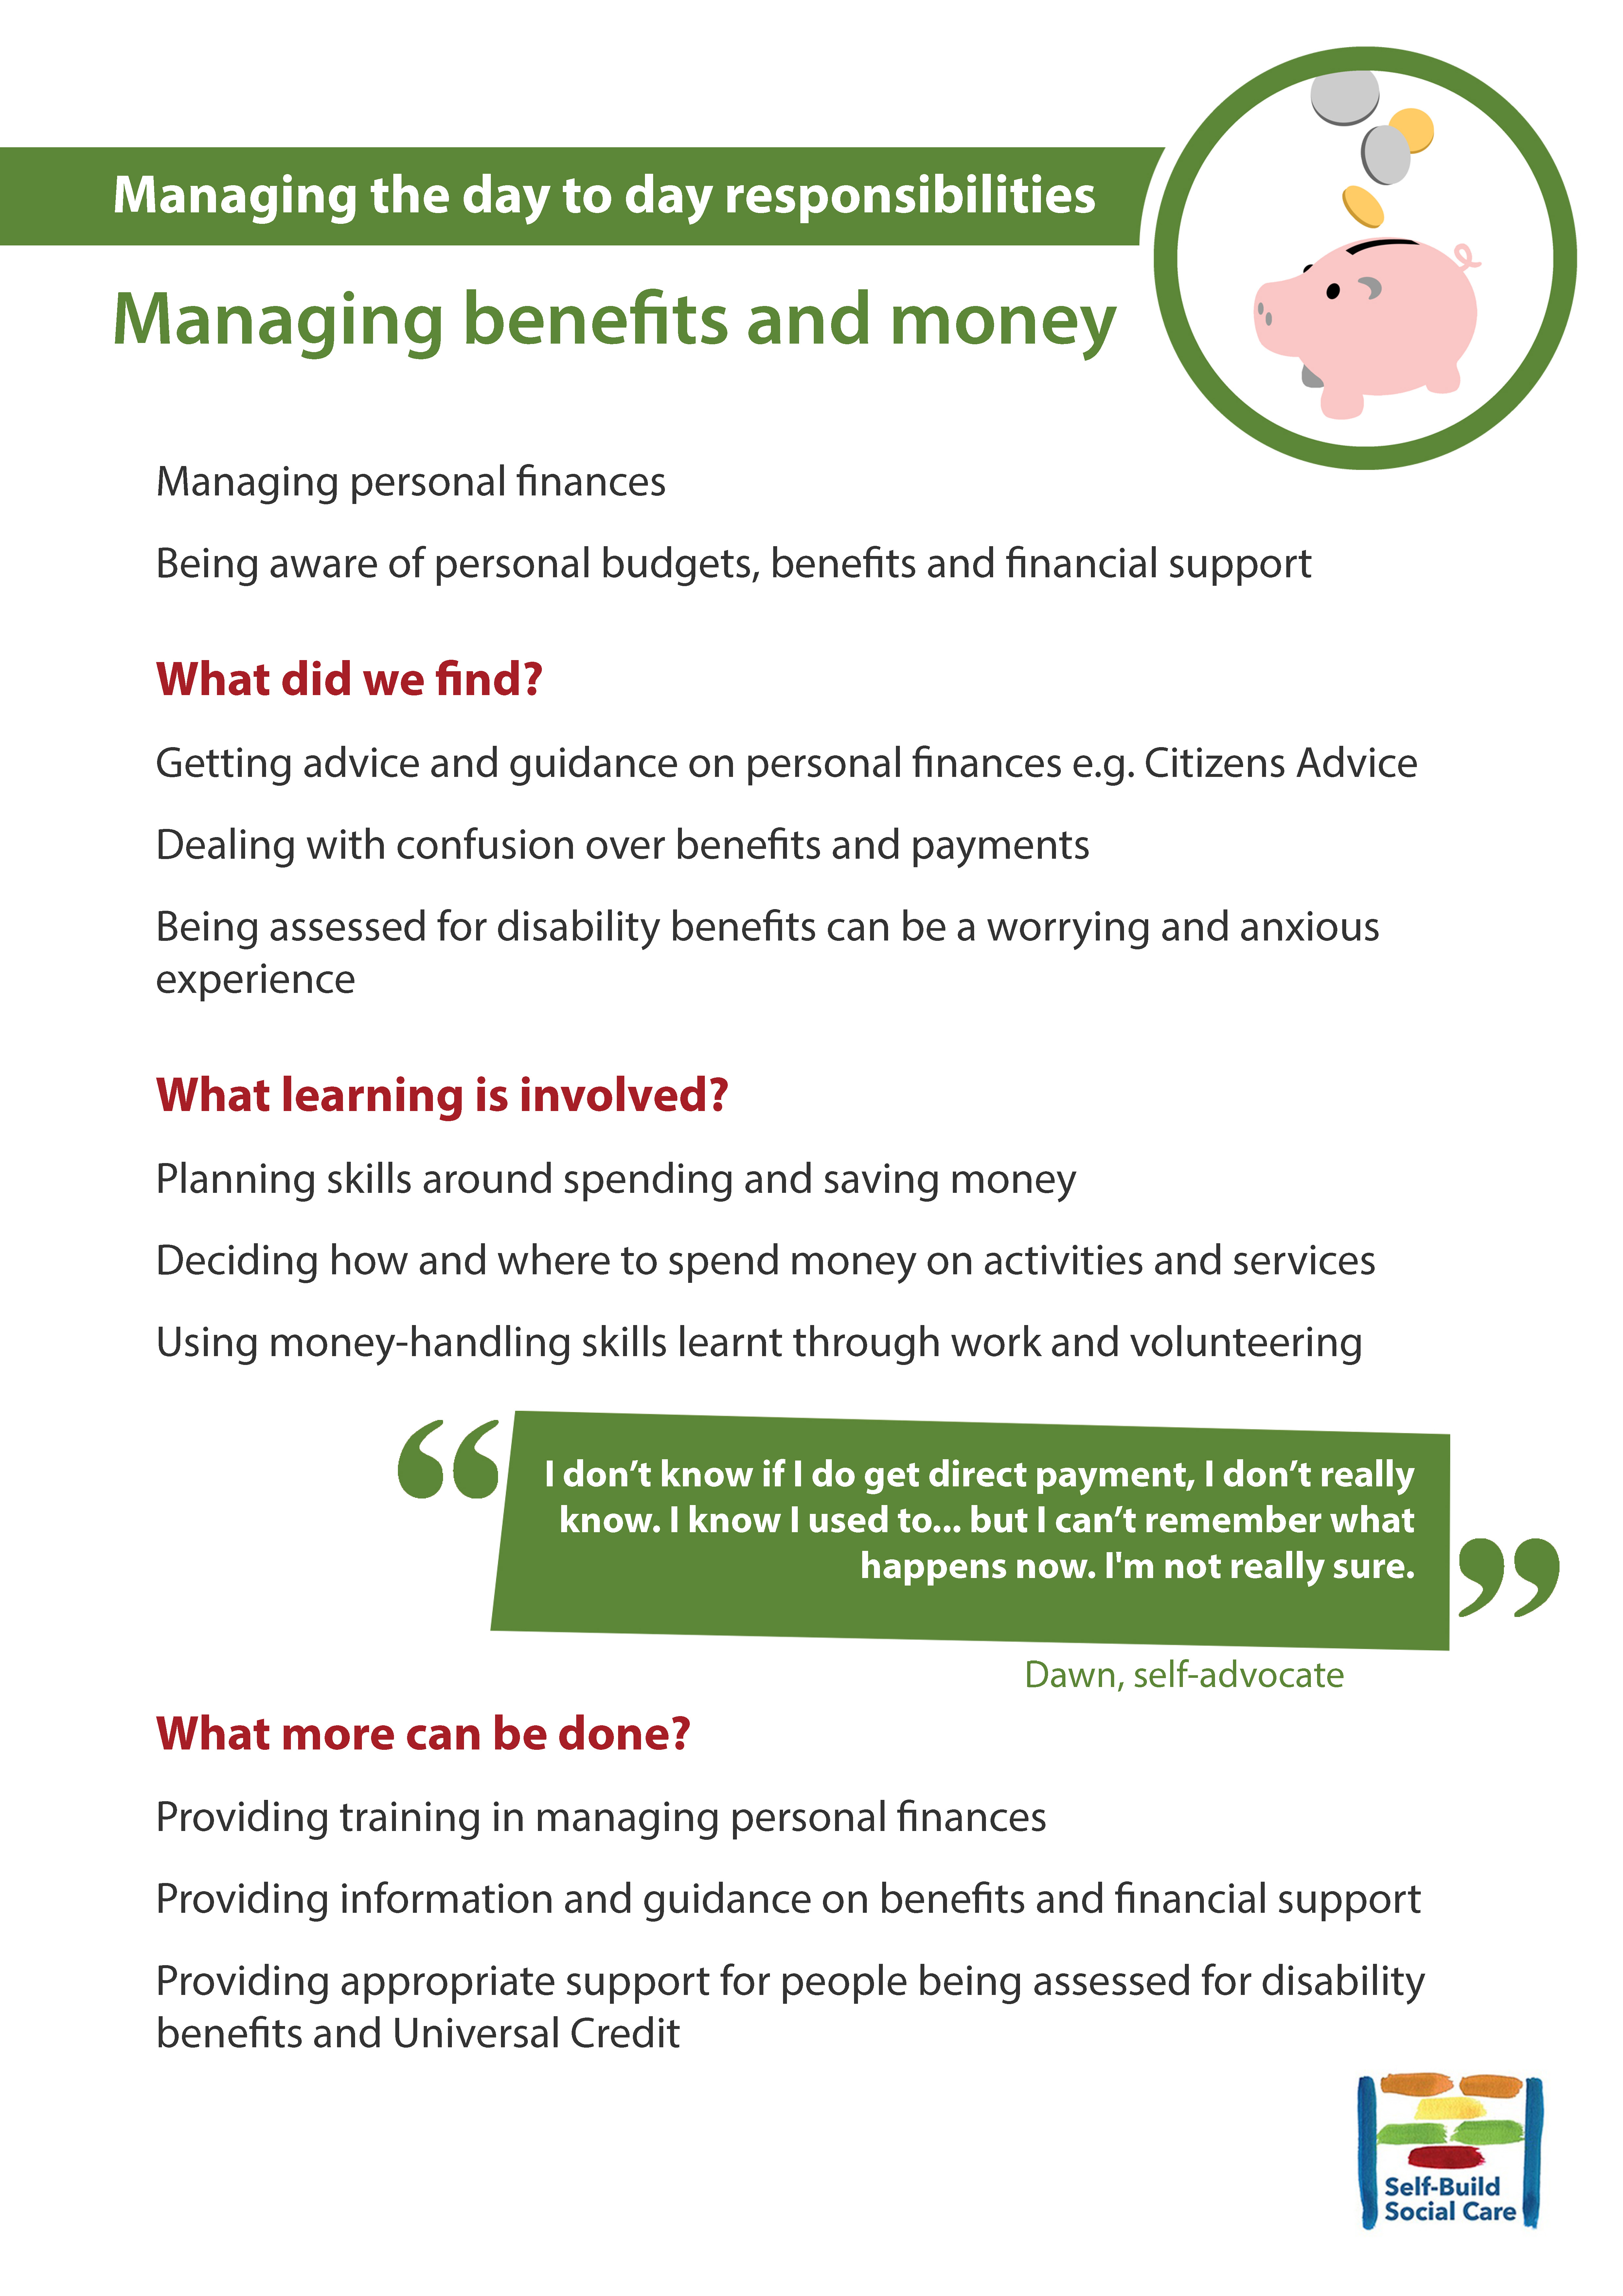 Managing benefits and money image